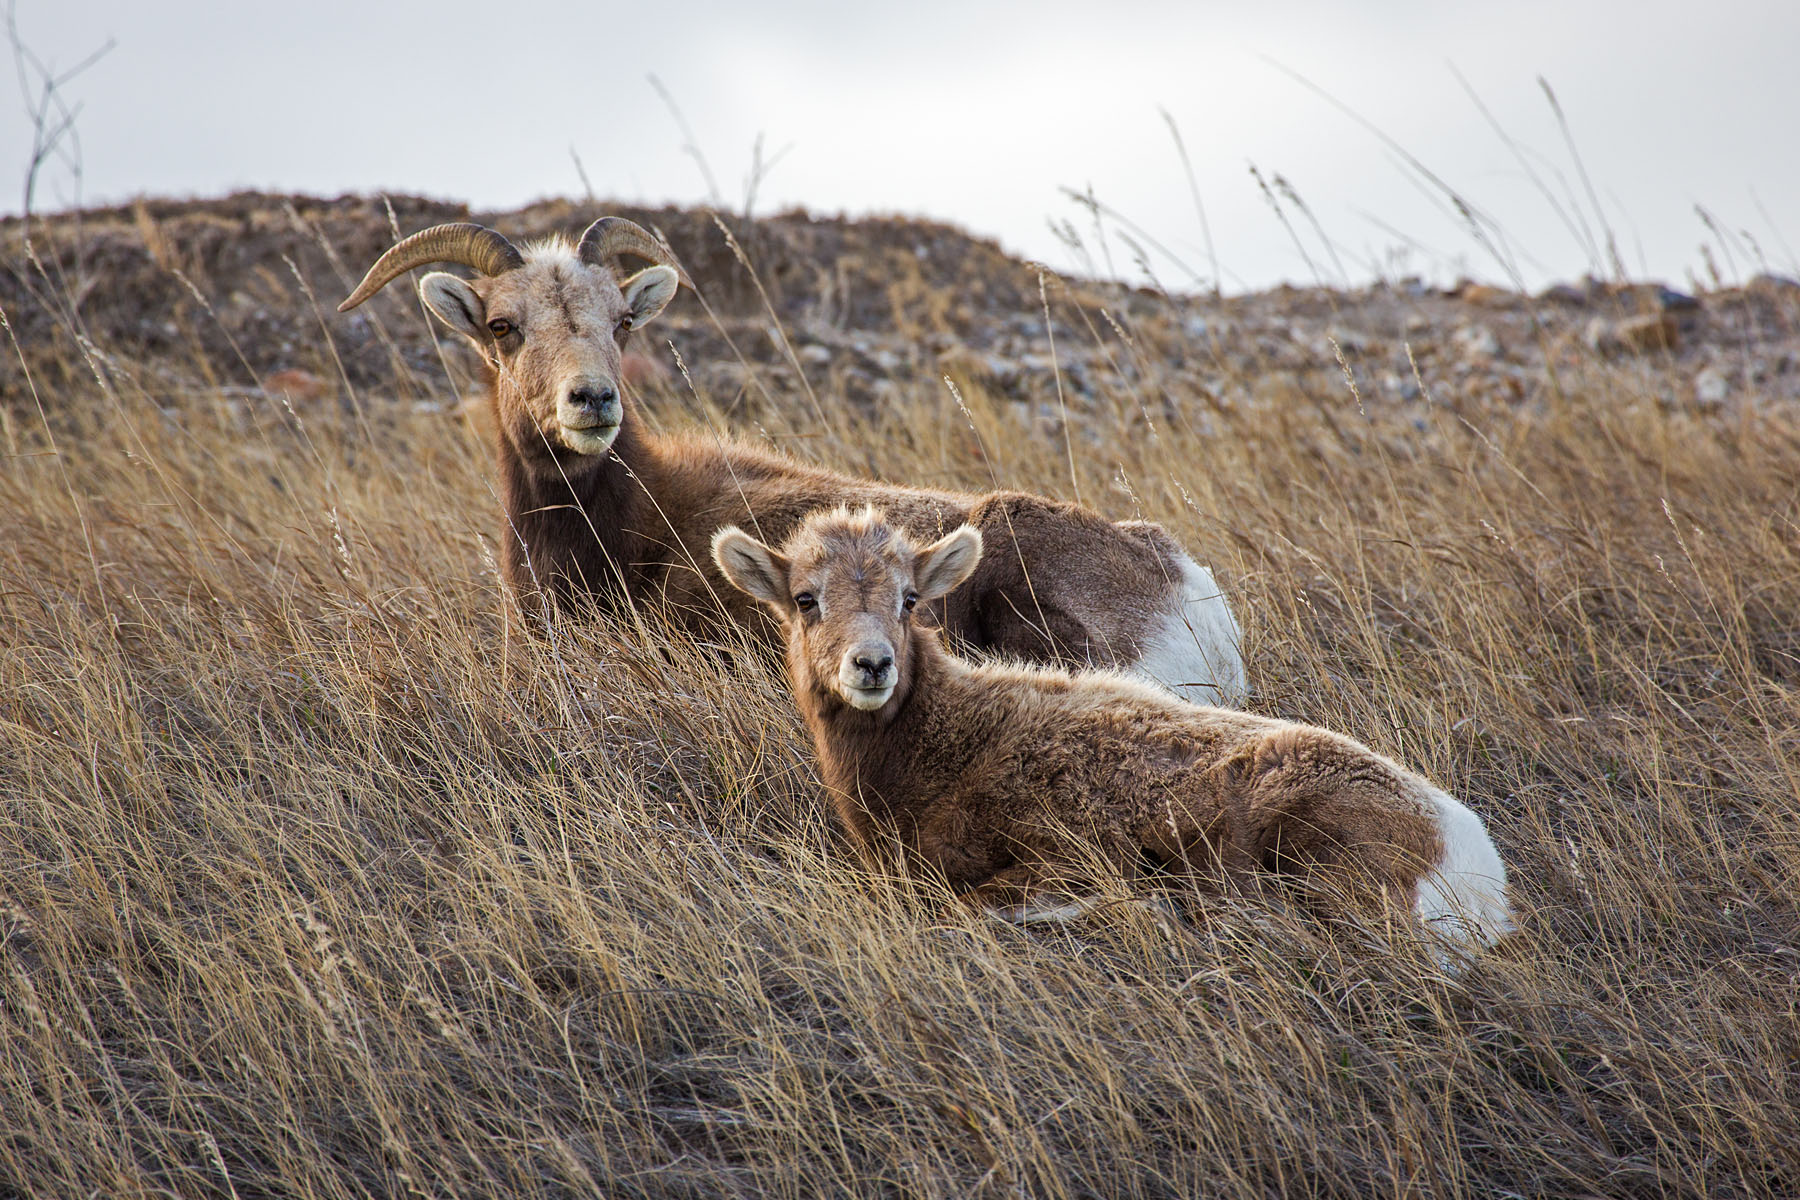 Bighorn ewe and lamb, Badlands National Park, South Dakota, early December 2021.  Click for next photo.